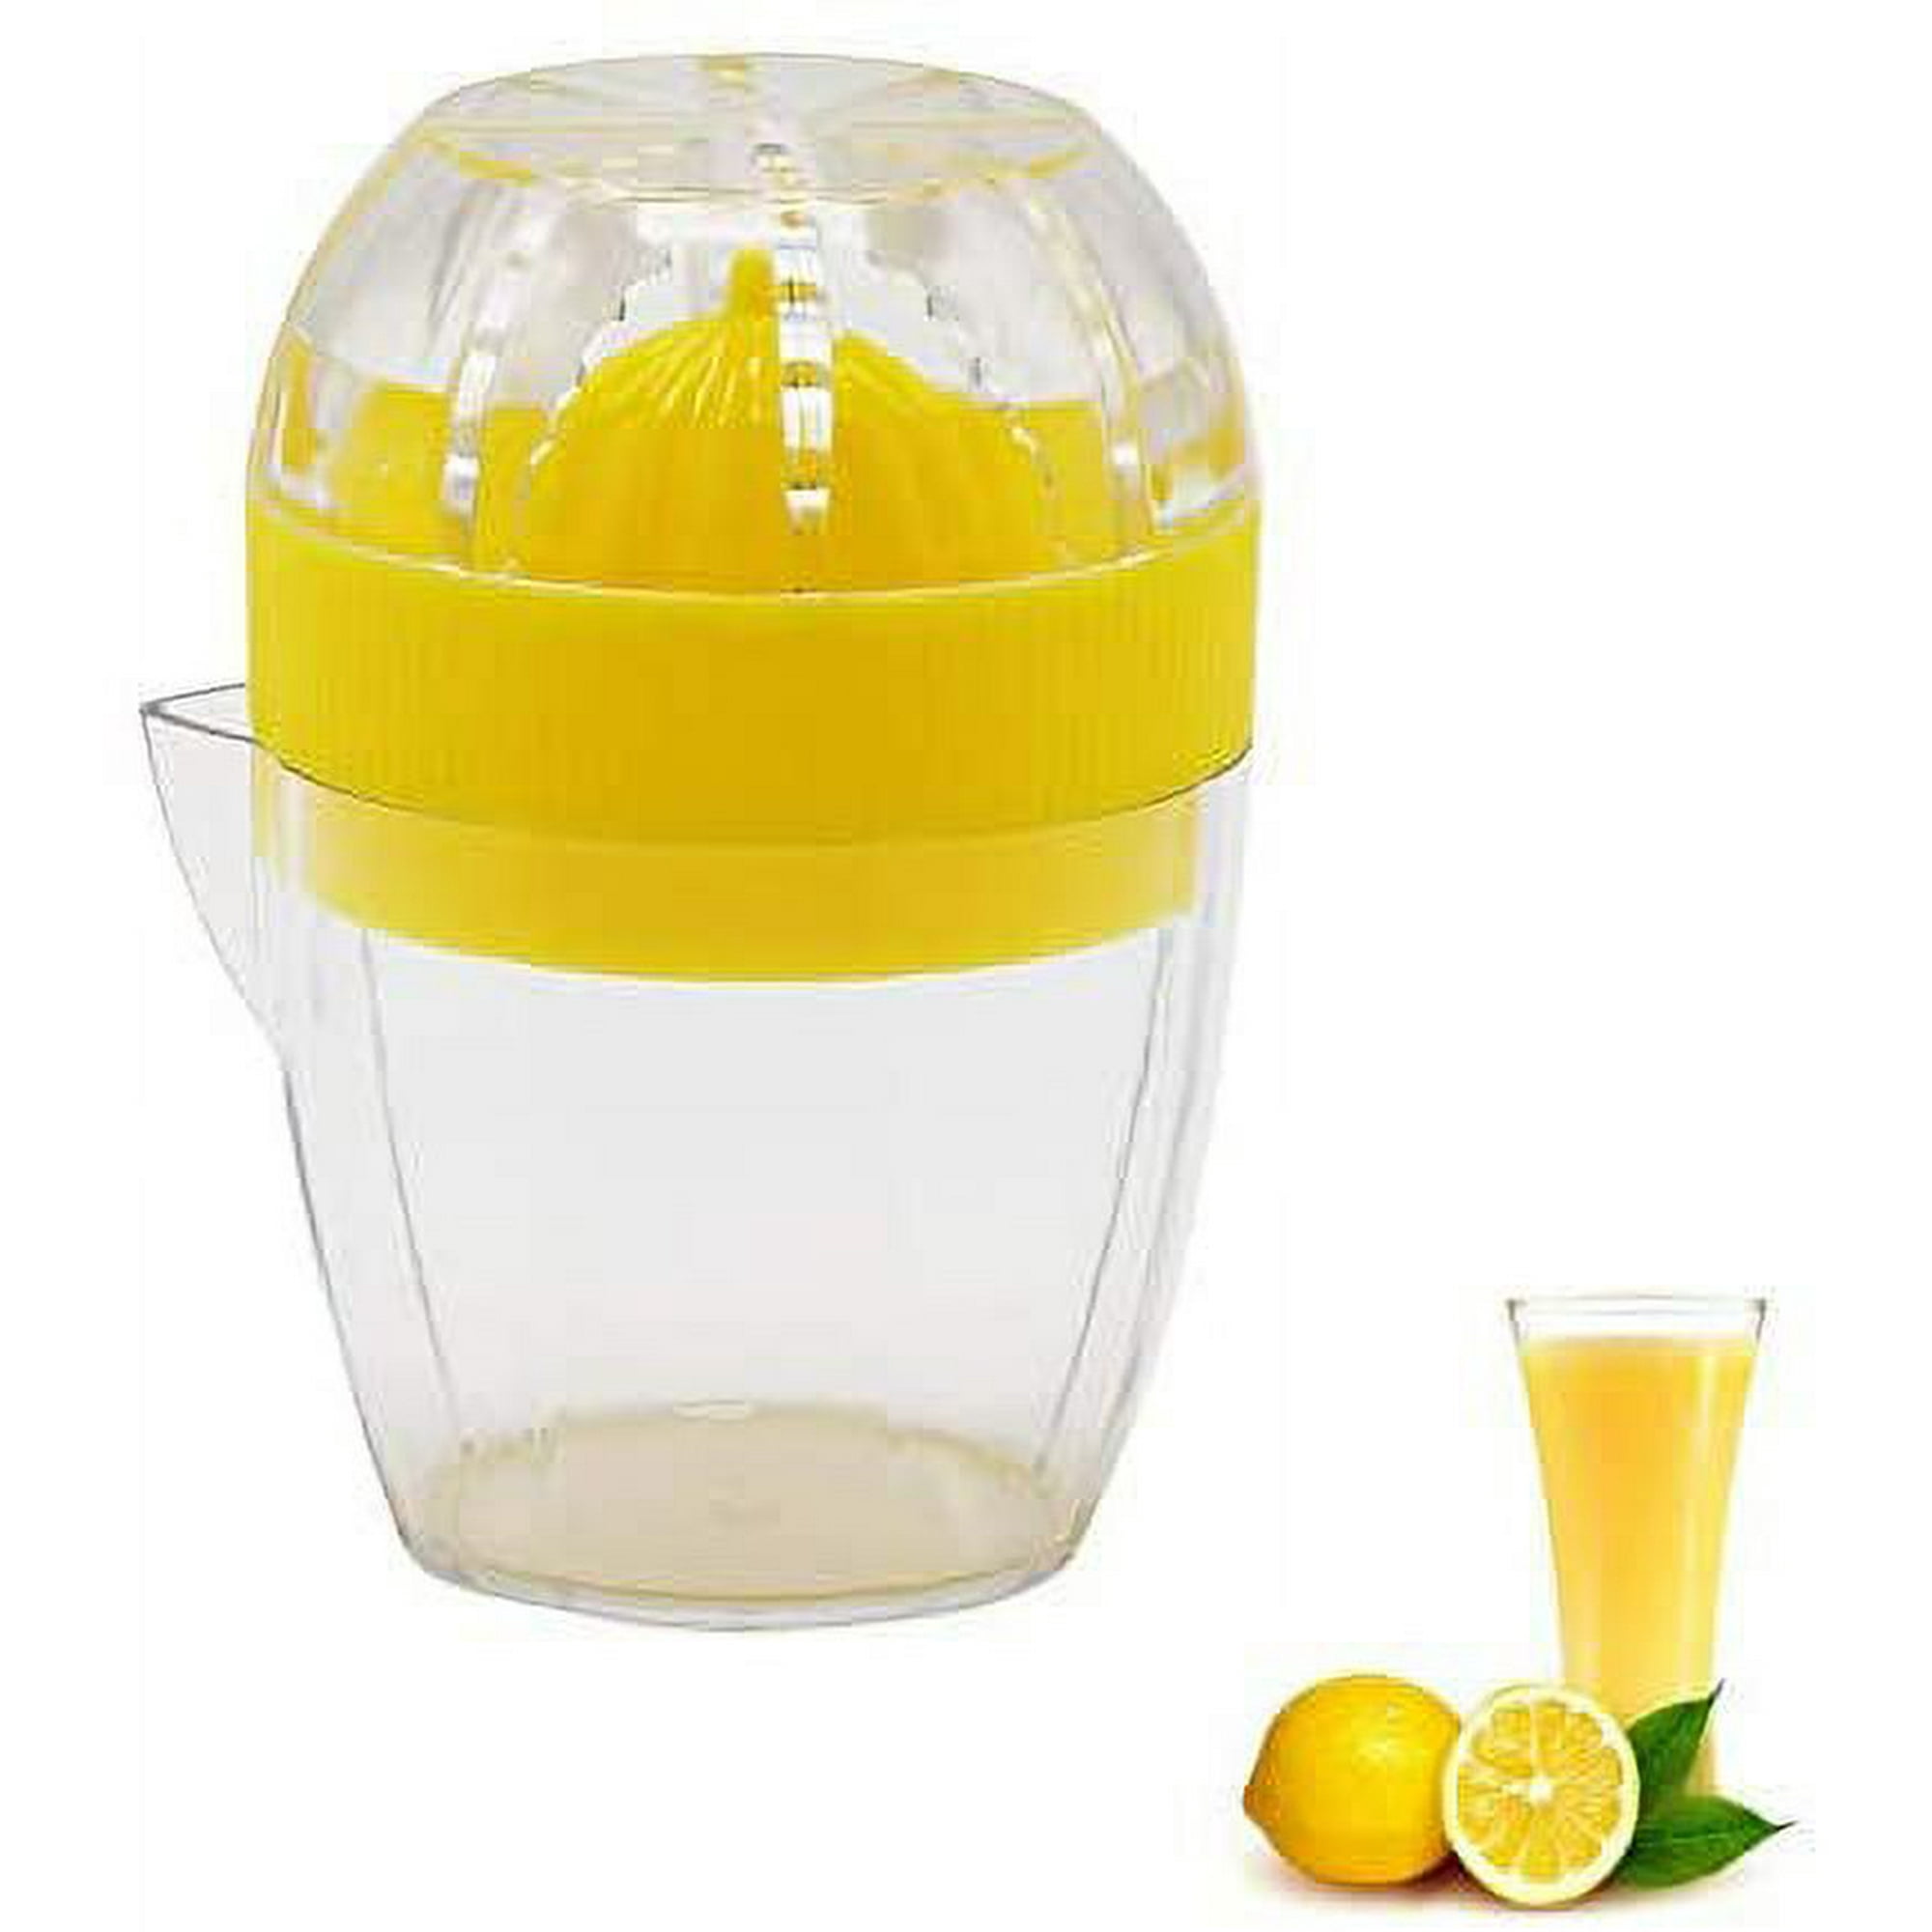 Exprimidor de limones eléctrico alto rendimiento en zumo - exprimidor,  exprimidor de naranjas 2 sentidos de giro - exprimidor eléctrico 2 conos 